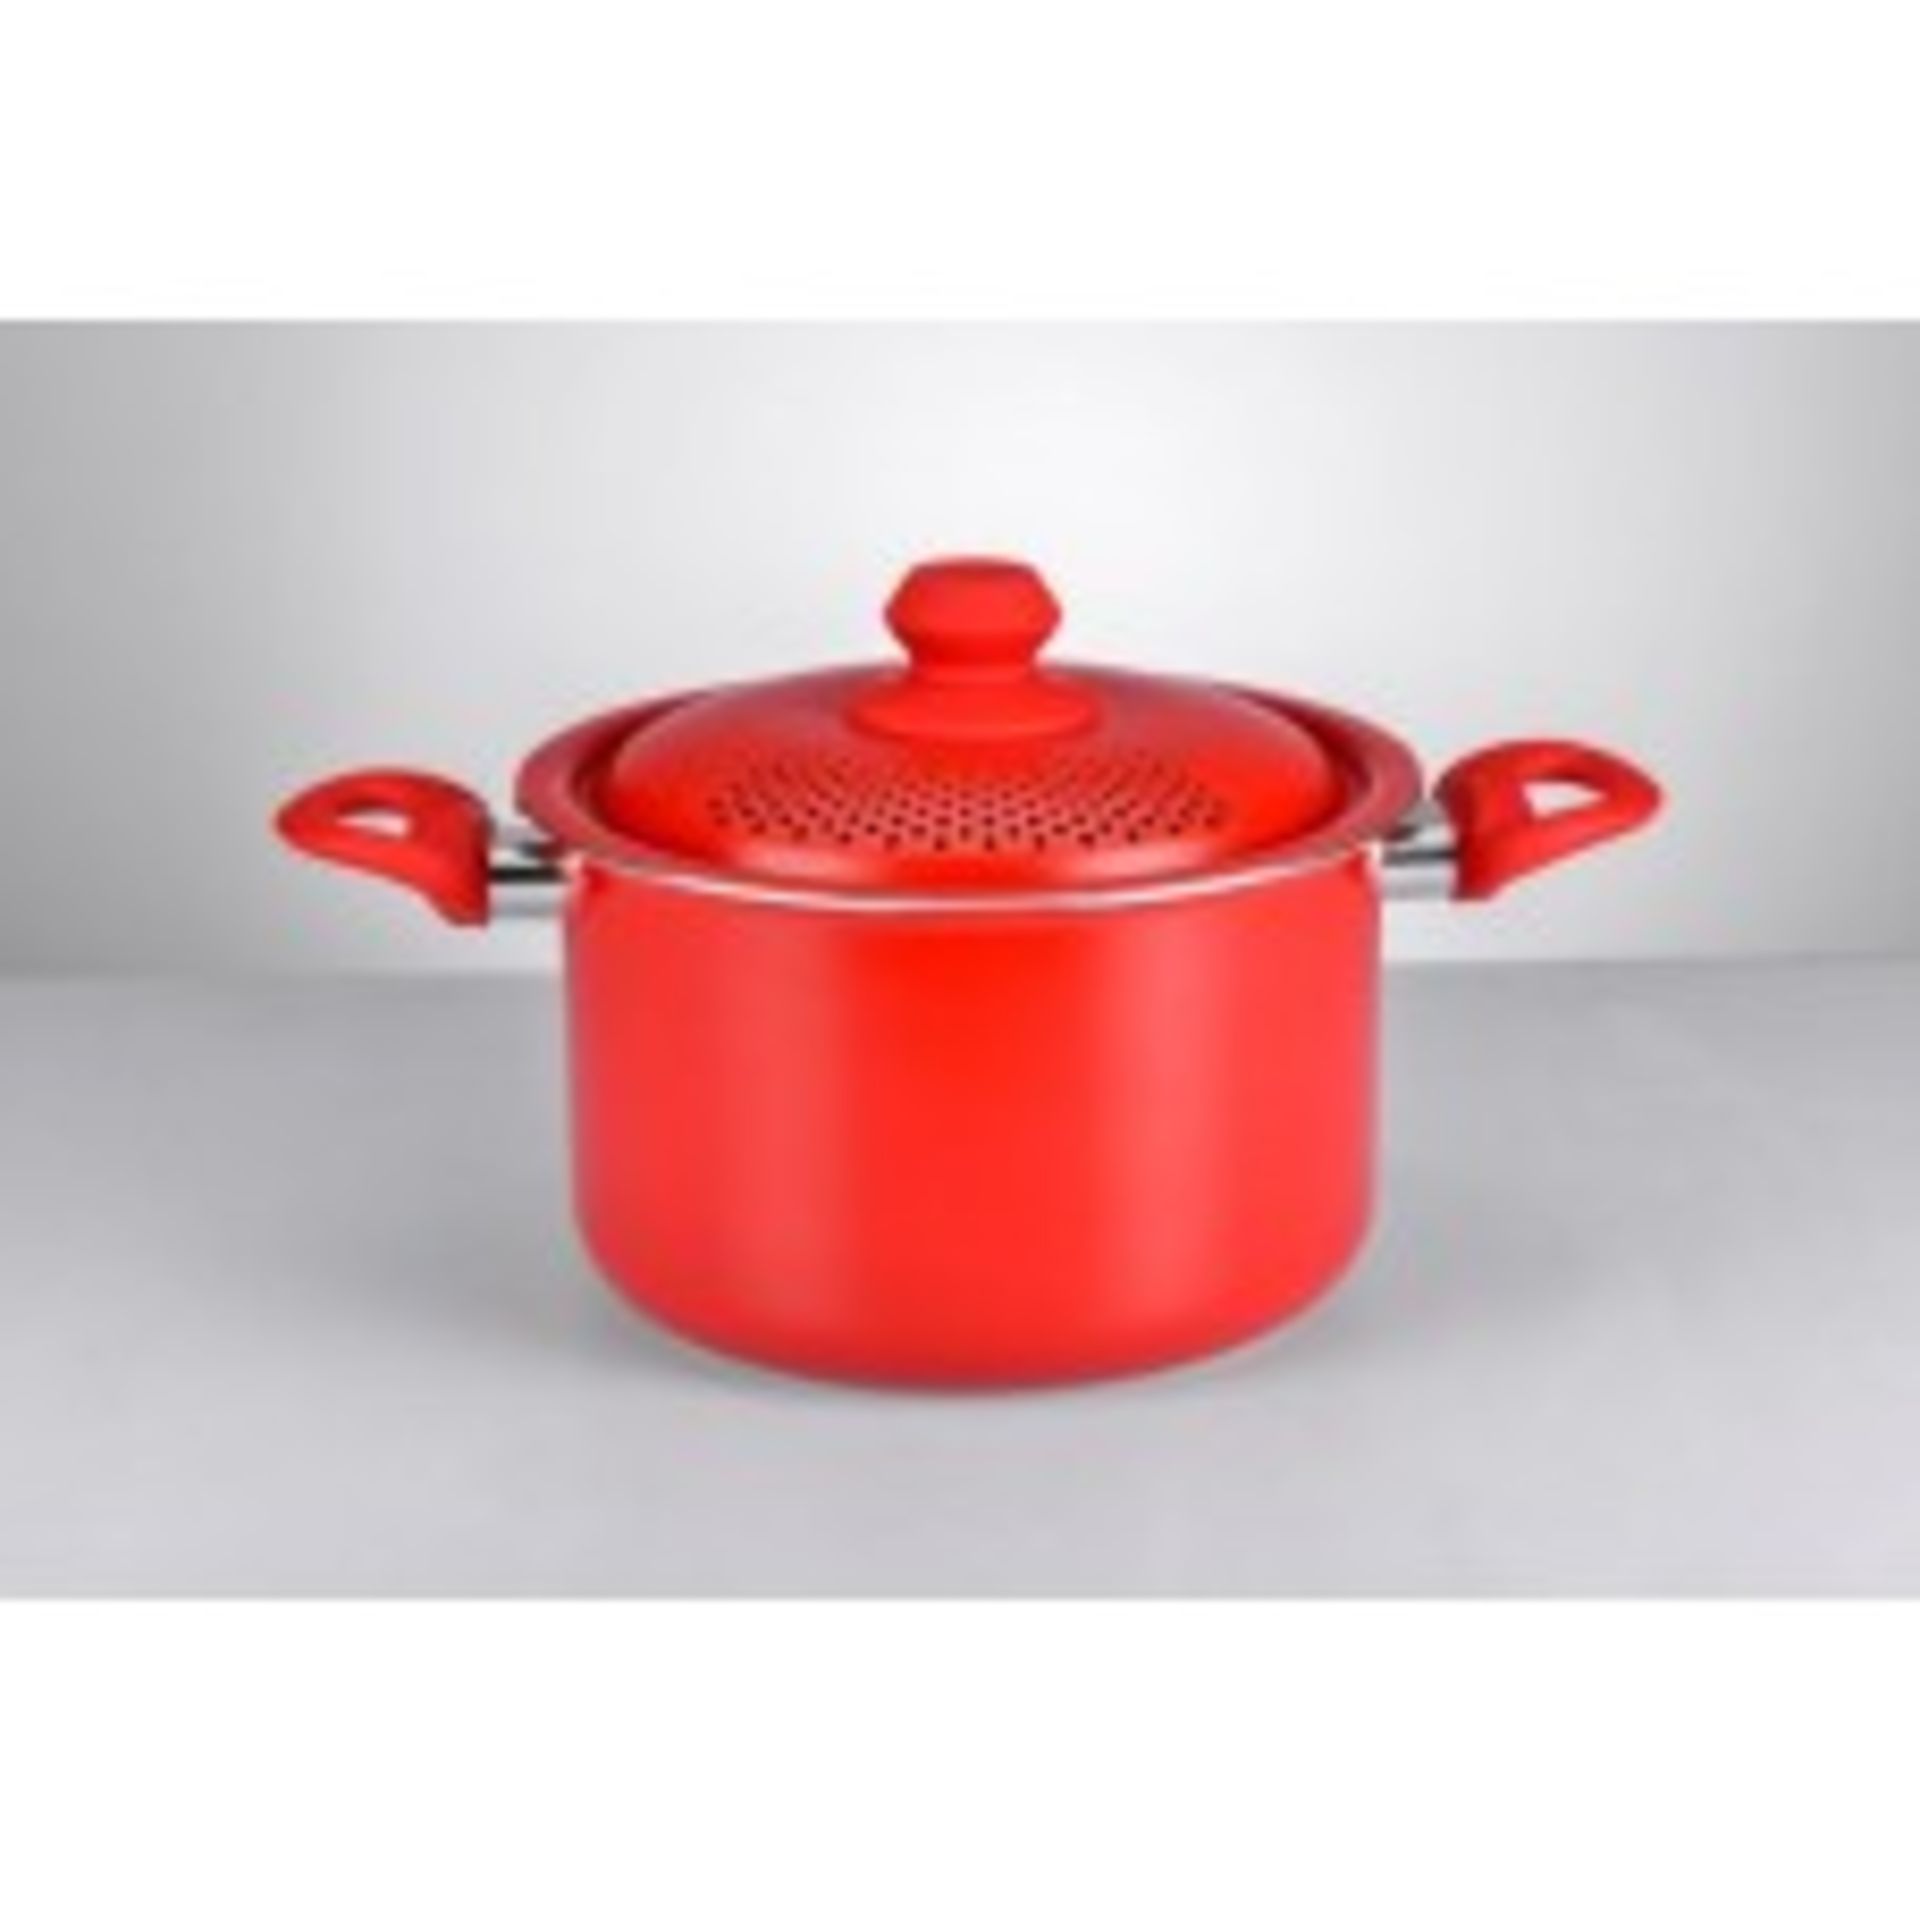 + VAT Brand New Red Durastone 4l Pasta Pot With Lid ISP £24.99 (Qudos Direct)